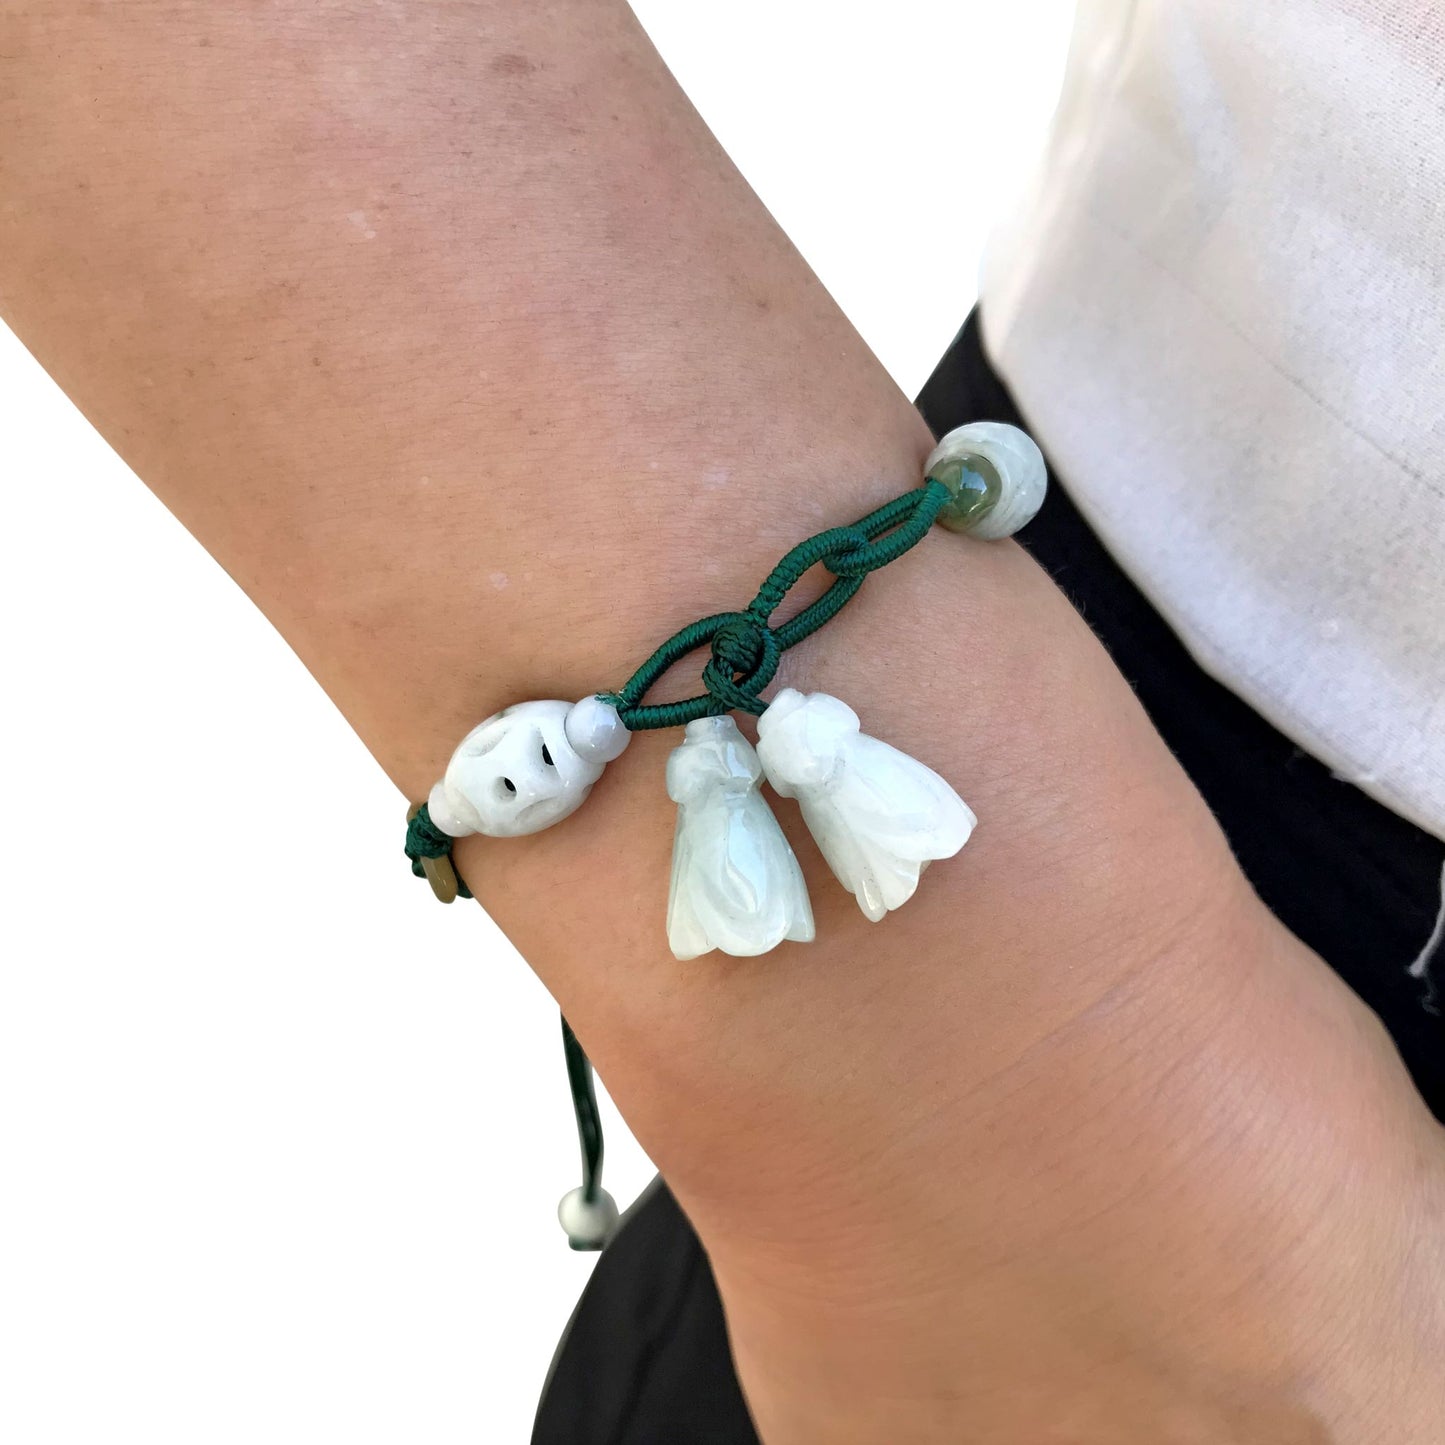 Accessorize in Style with Dangling Bellflower Jade Bracelet